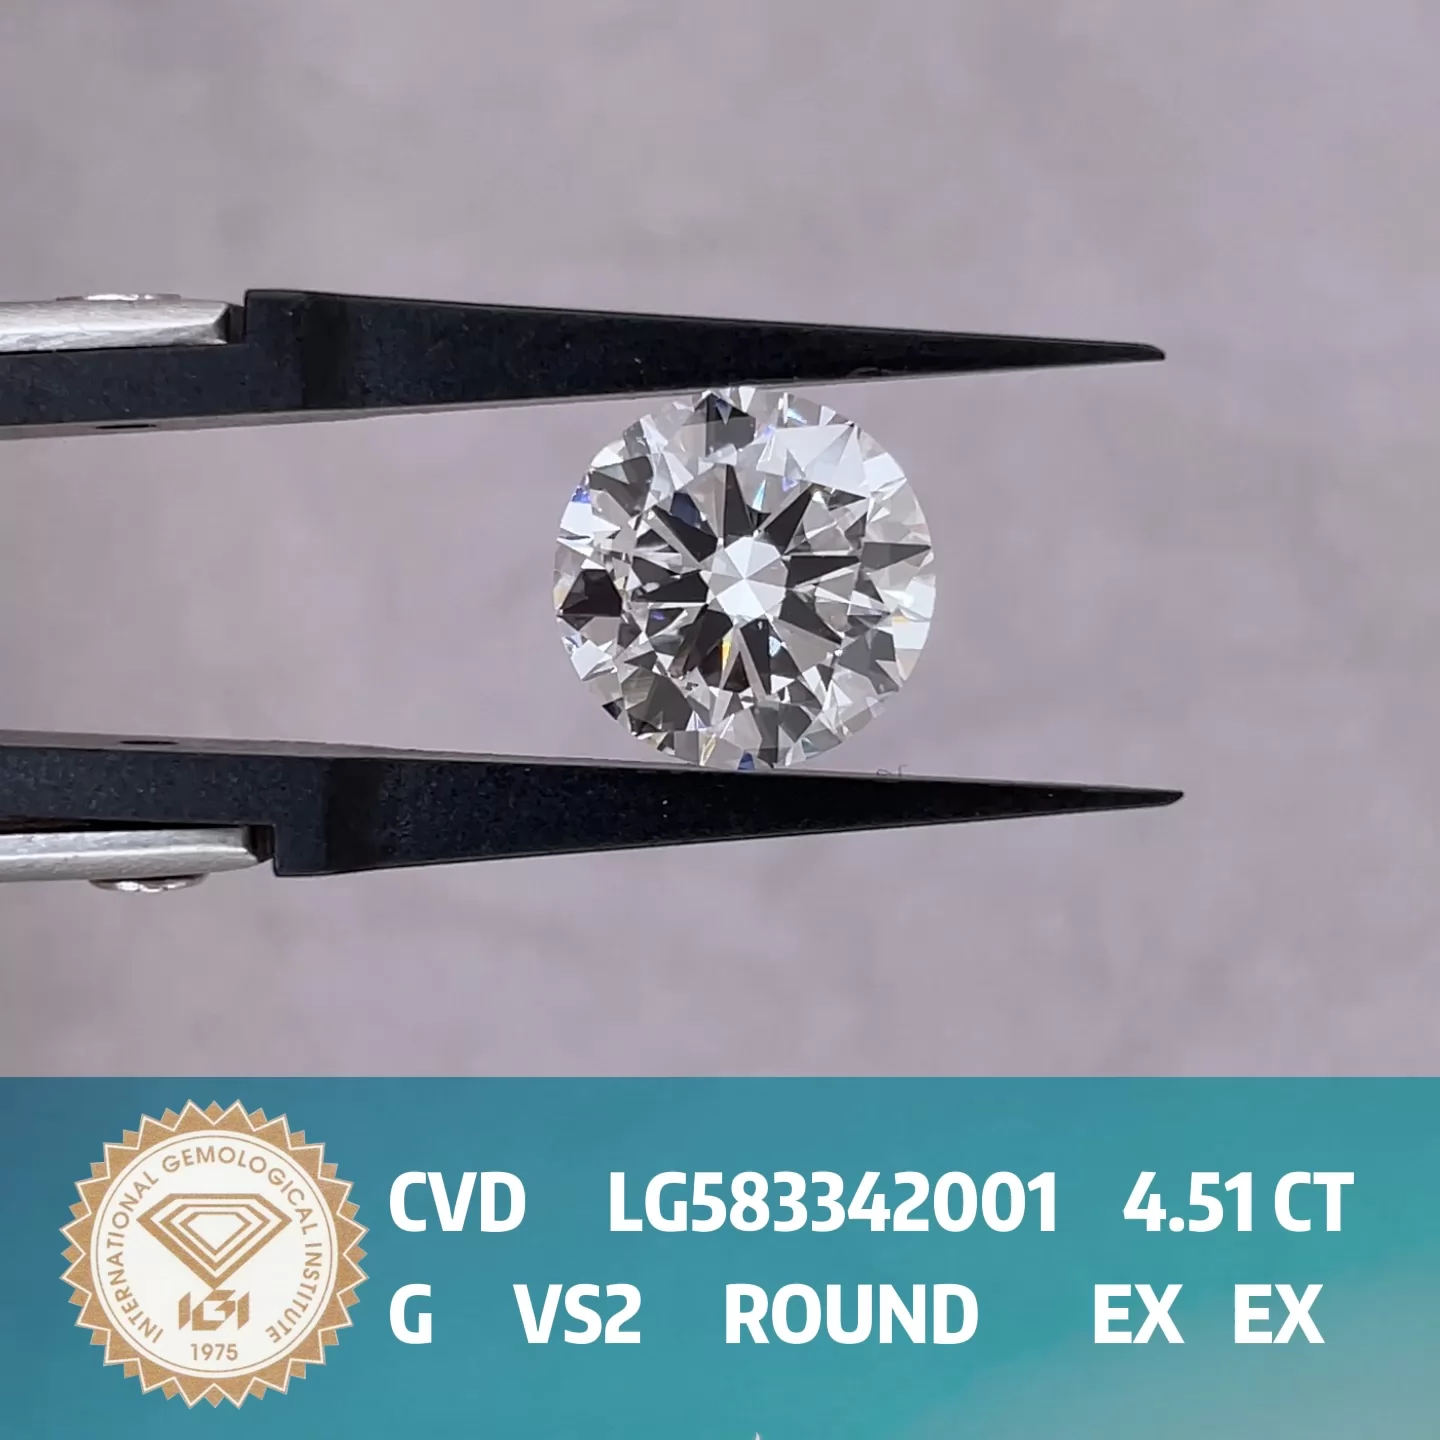 Round Brilliant Cut 4.51ct G Color CVD Lab Grown Diamond